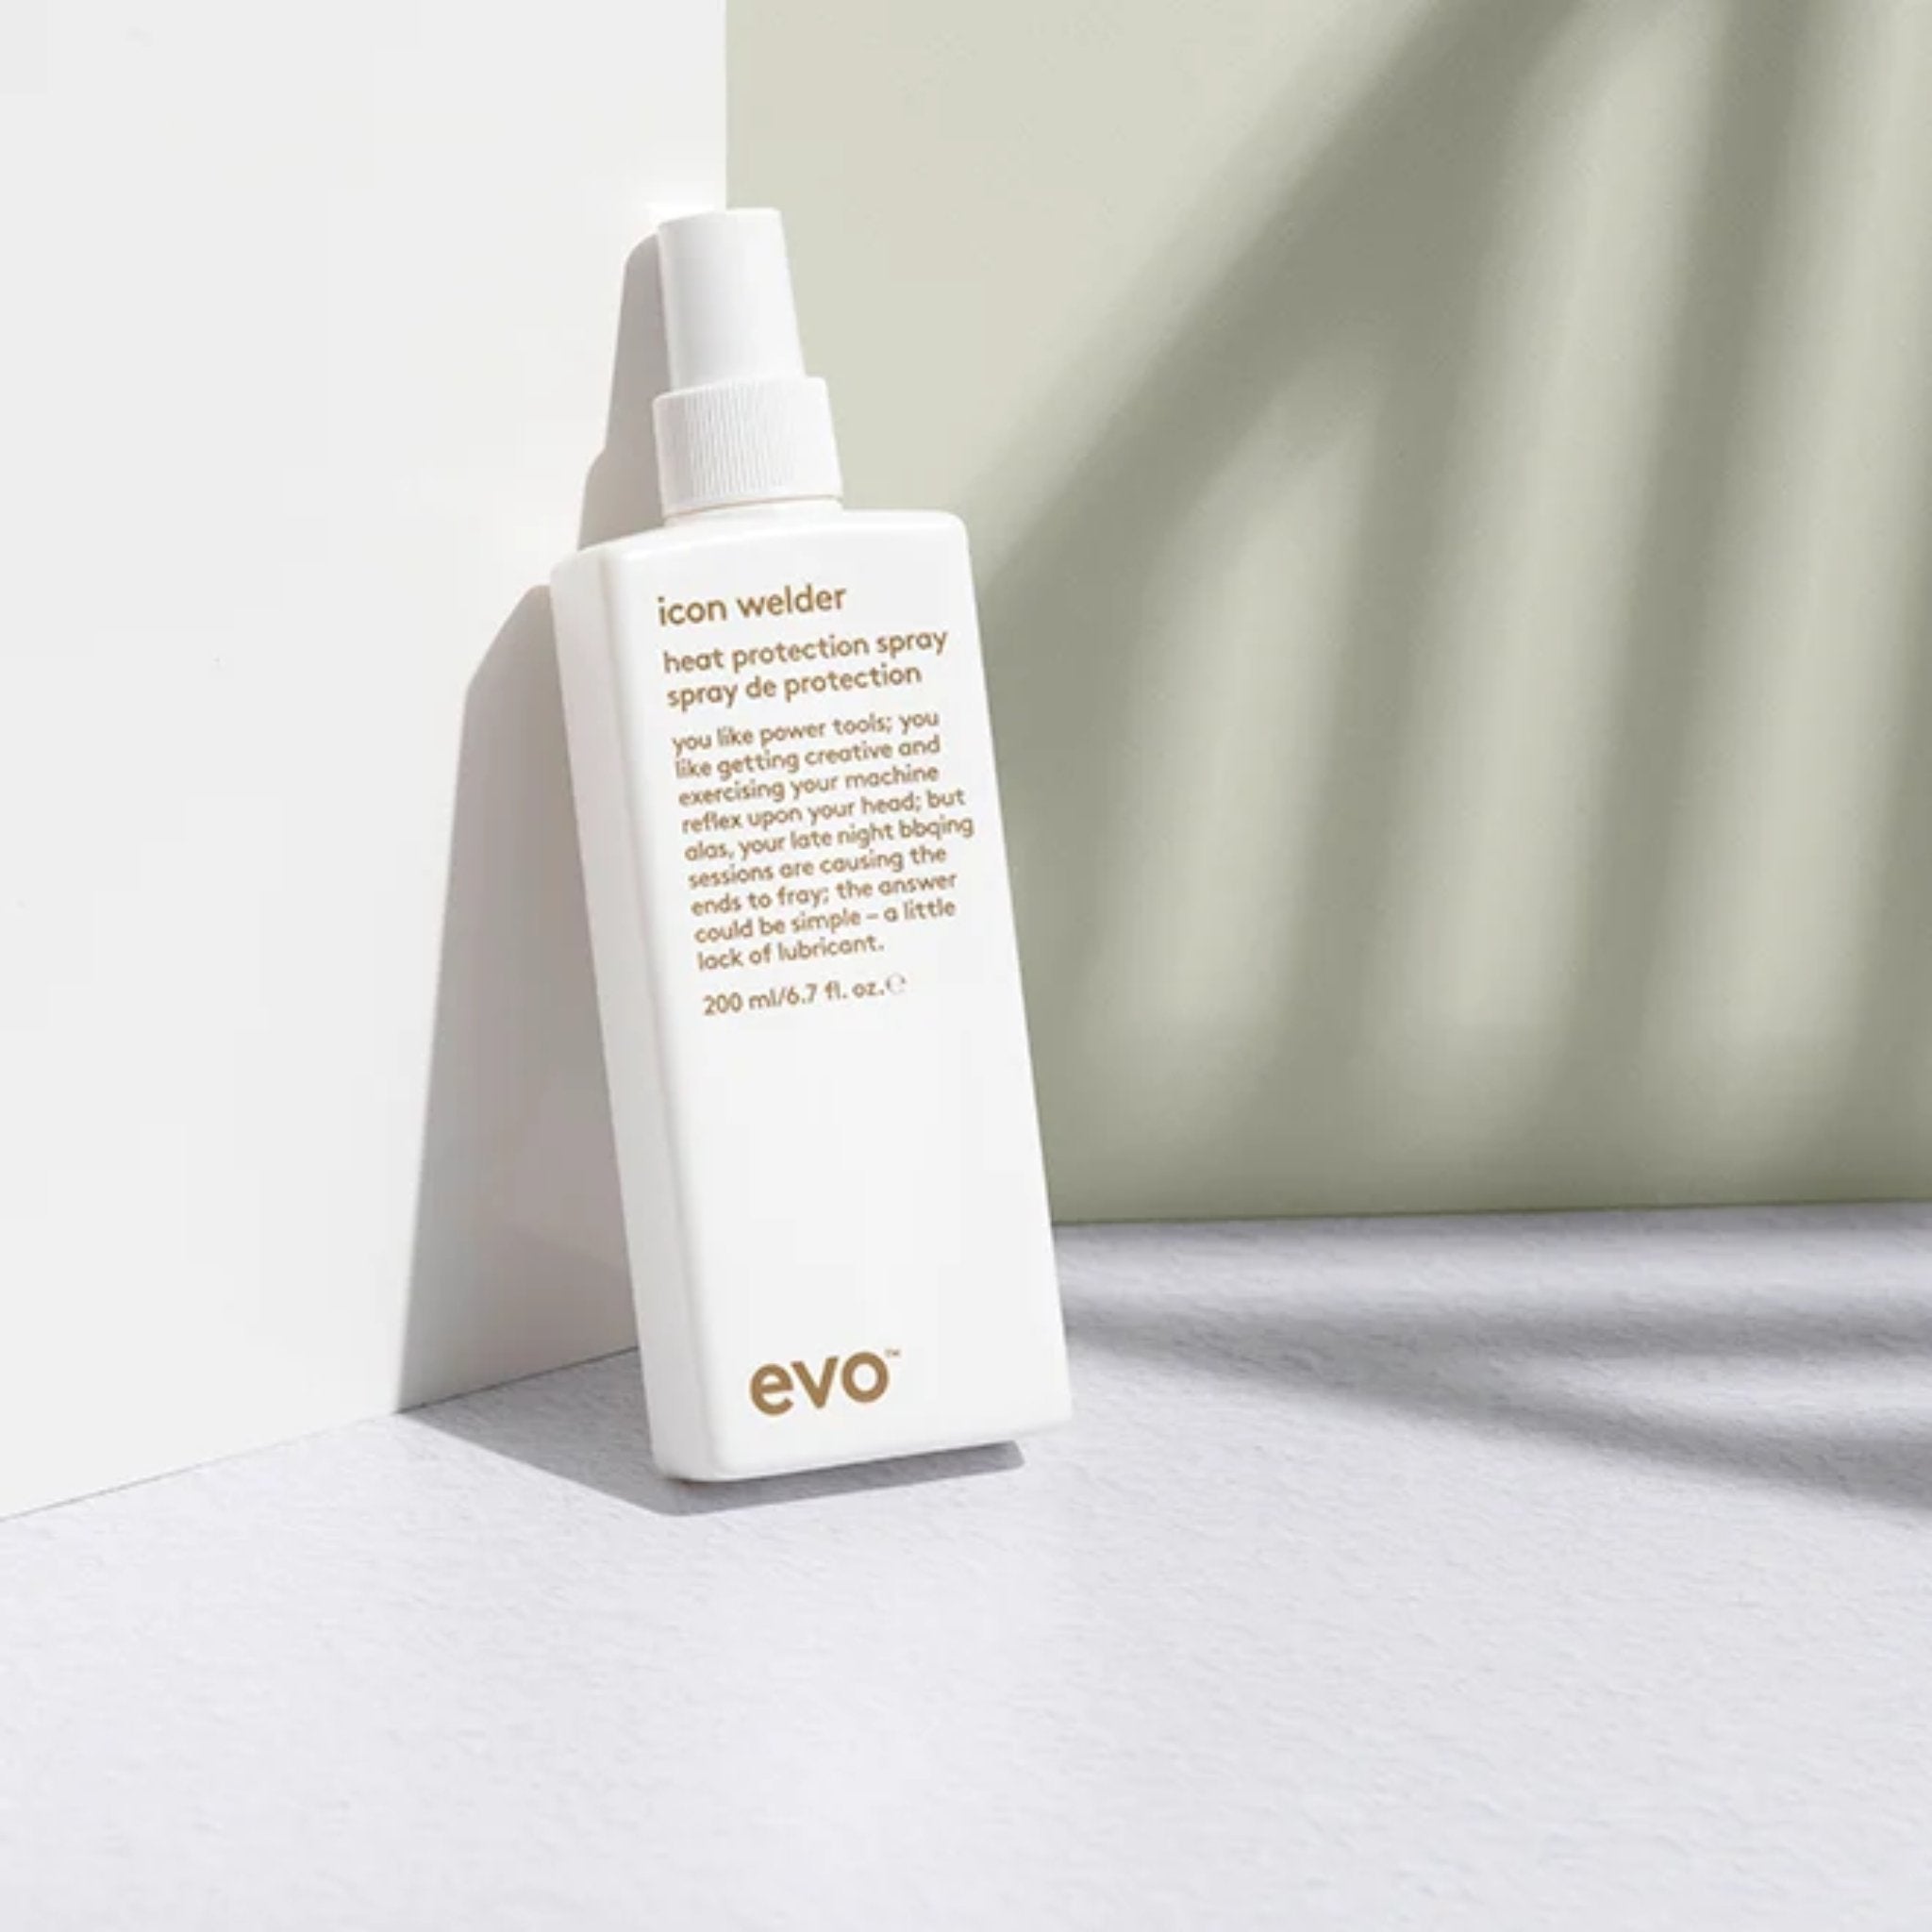 Evo. Icon Welder Spray Protection De Chaleur - 200 ml - Concept C. Shop